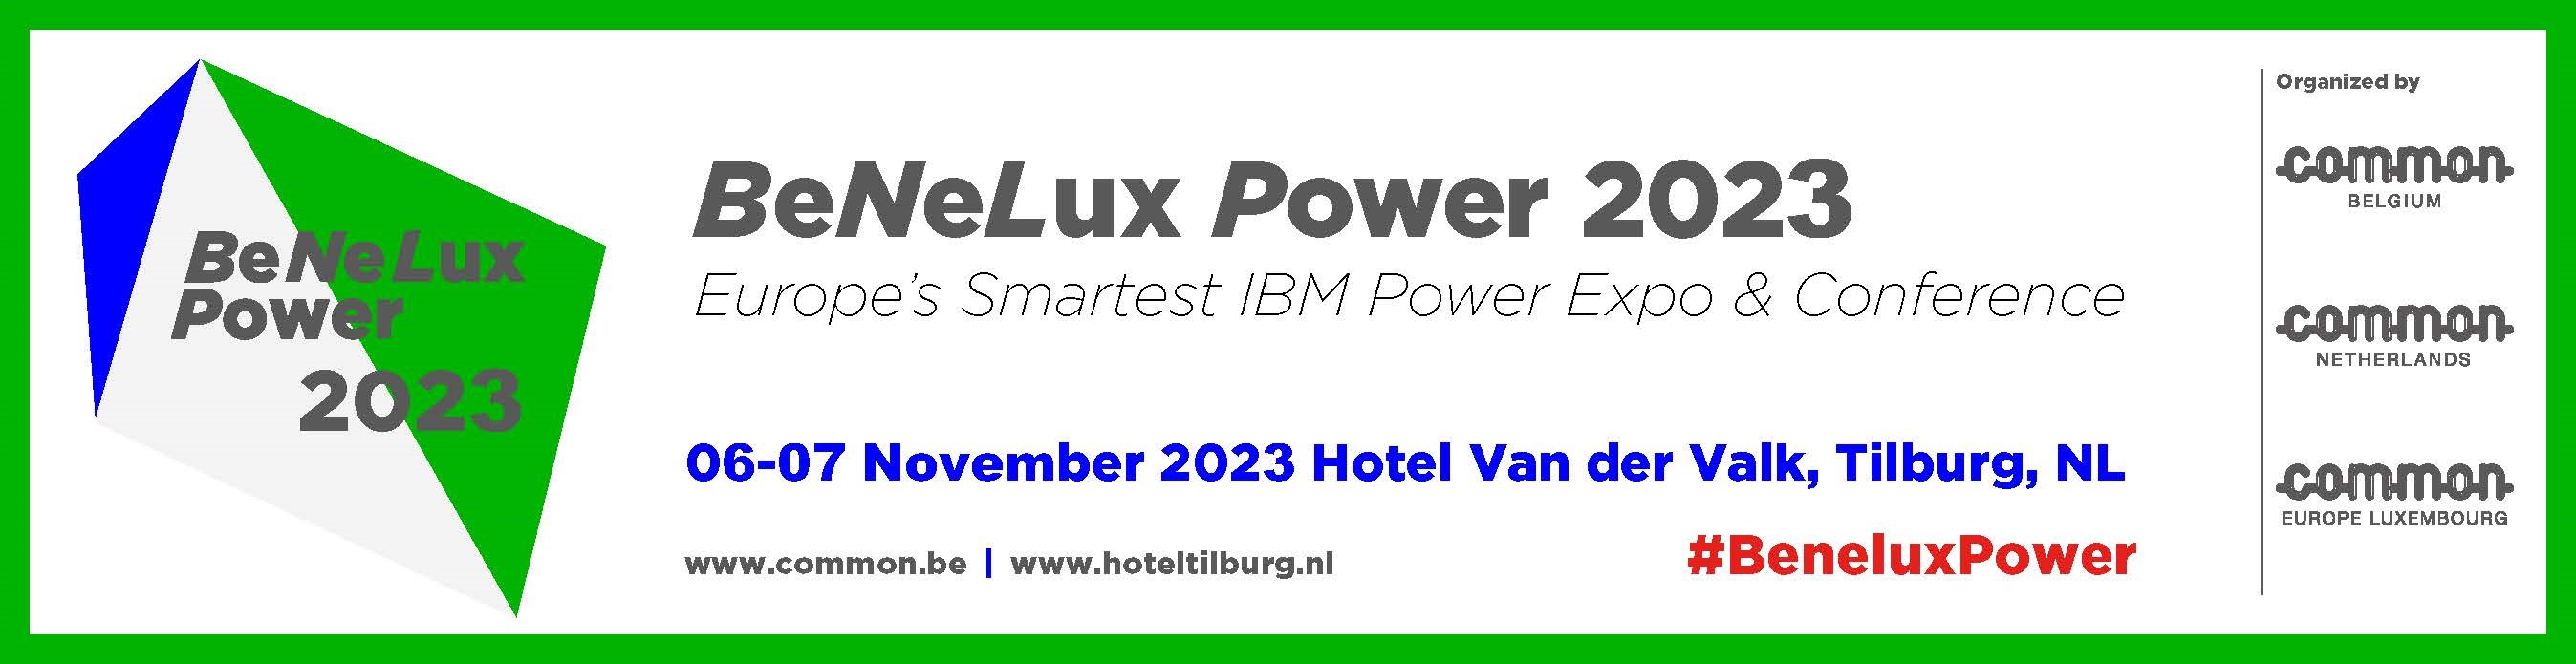 Benelux Power 2023